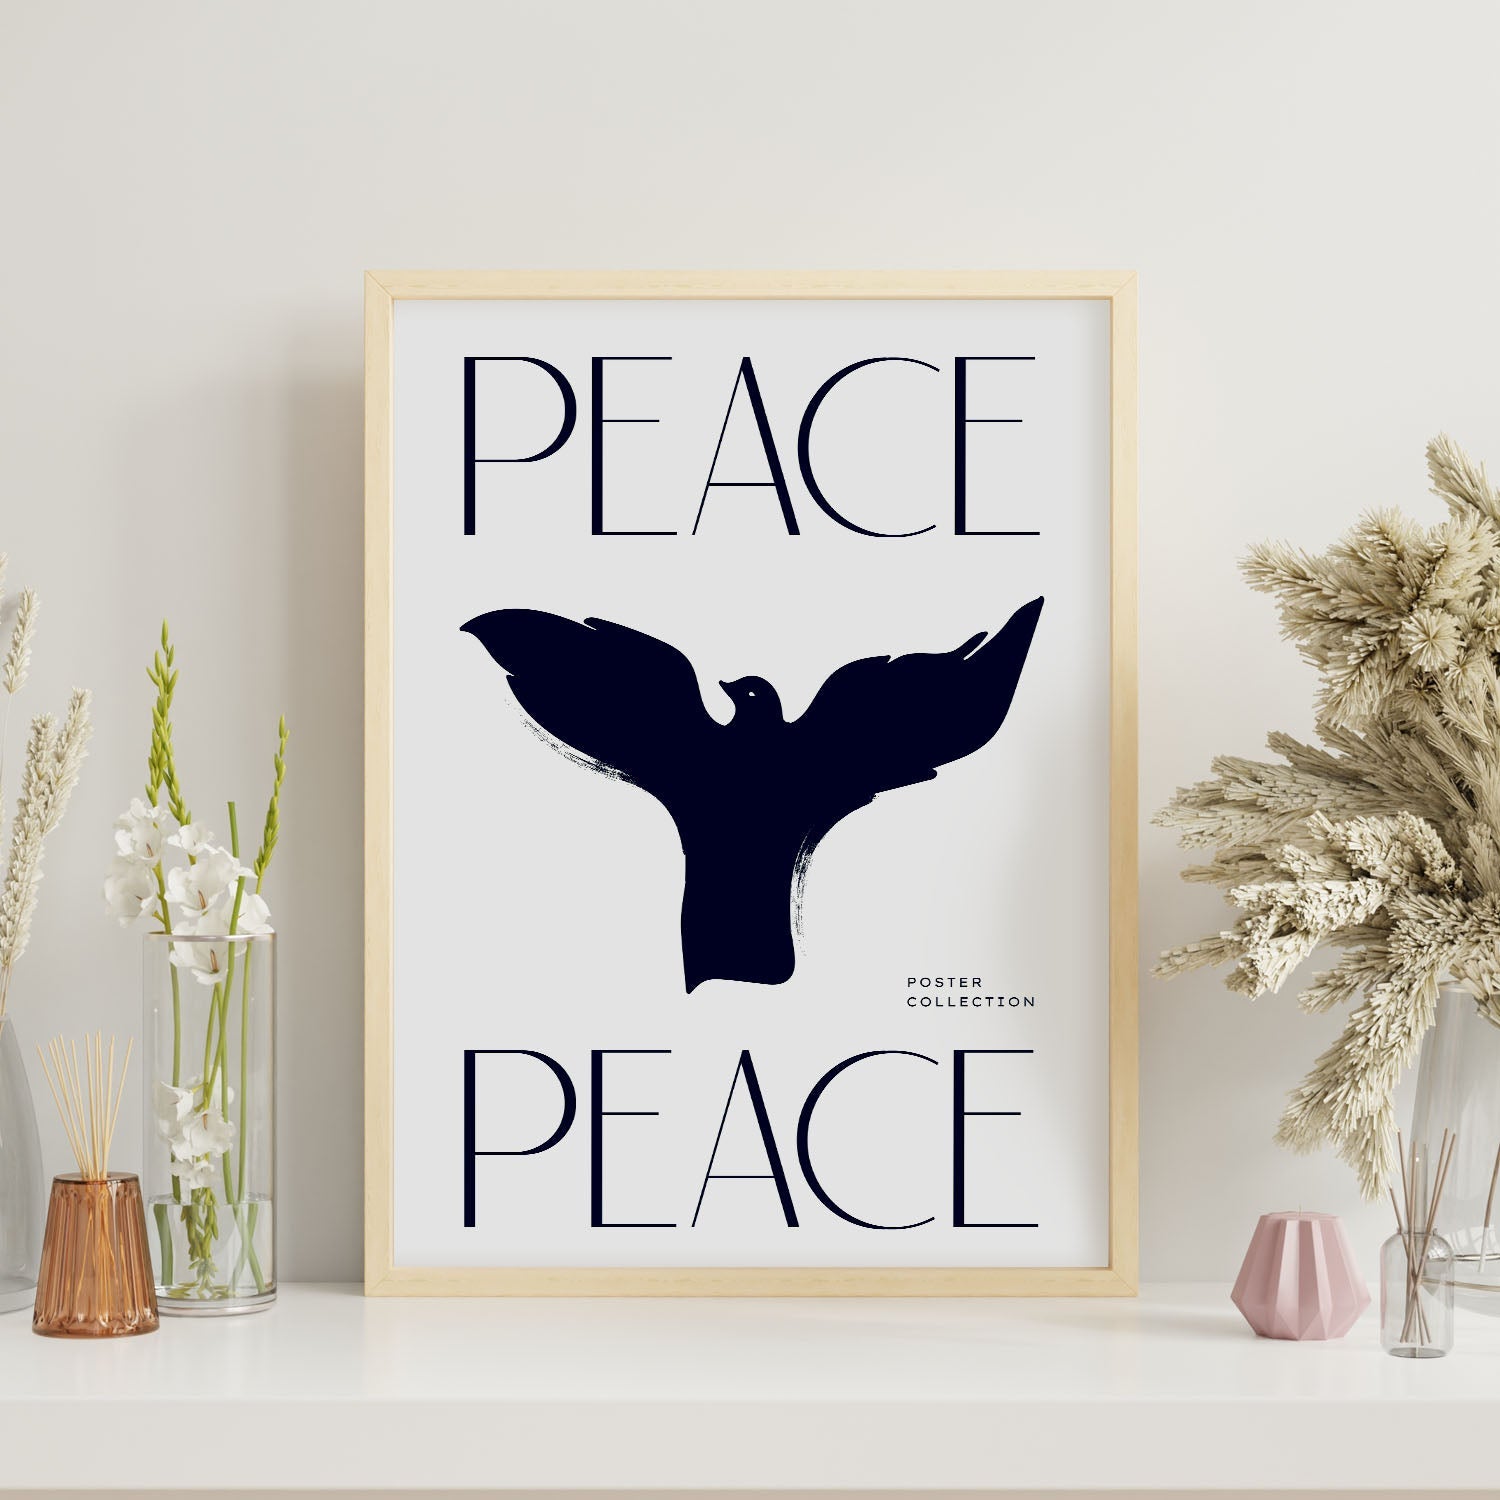 Spread Peace-Artwork-Nacnic-Nacnic Estudio SL